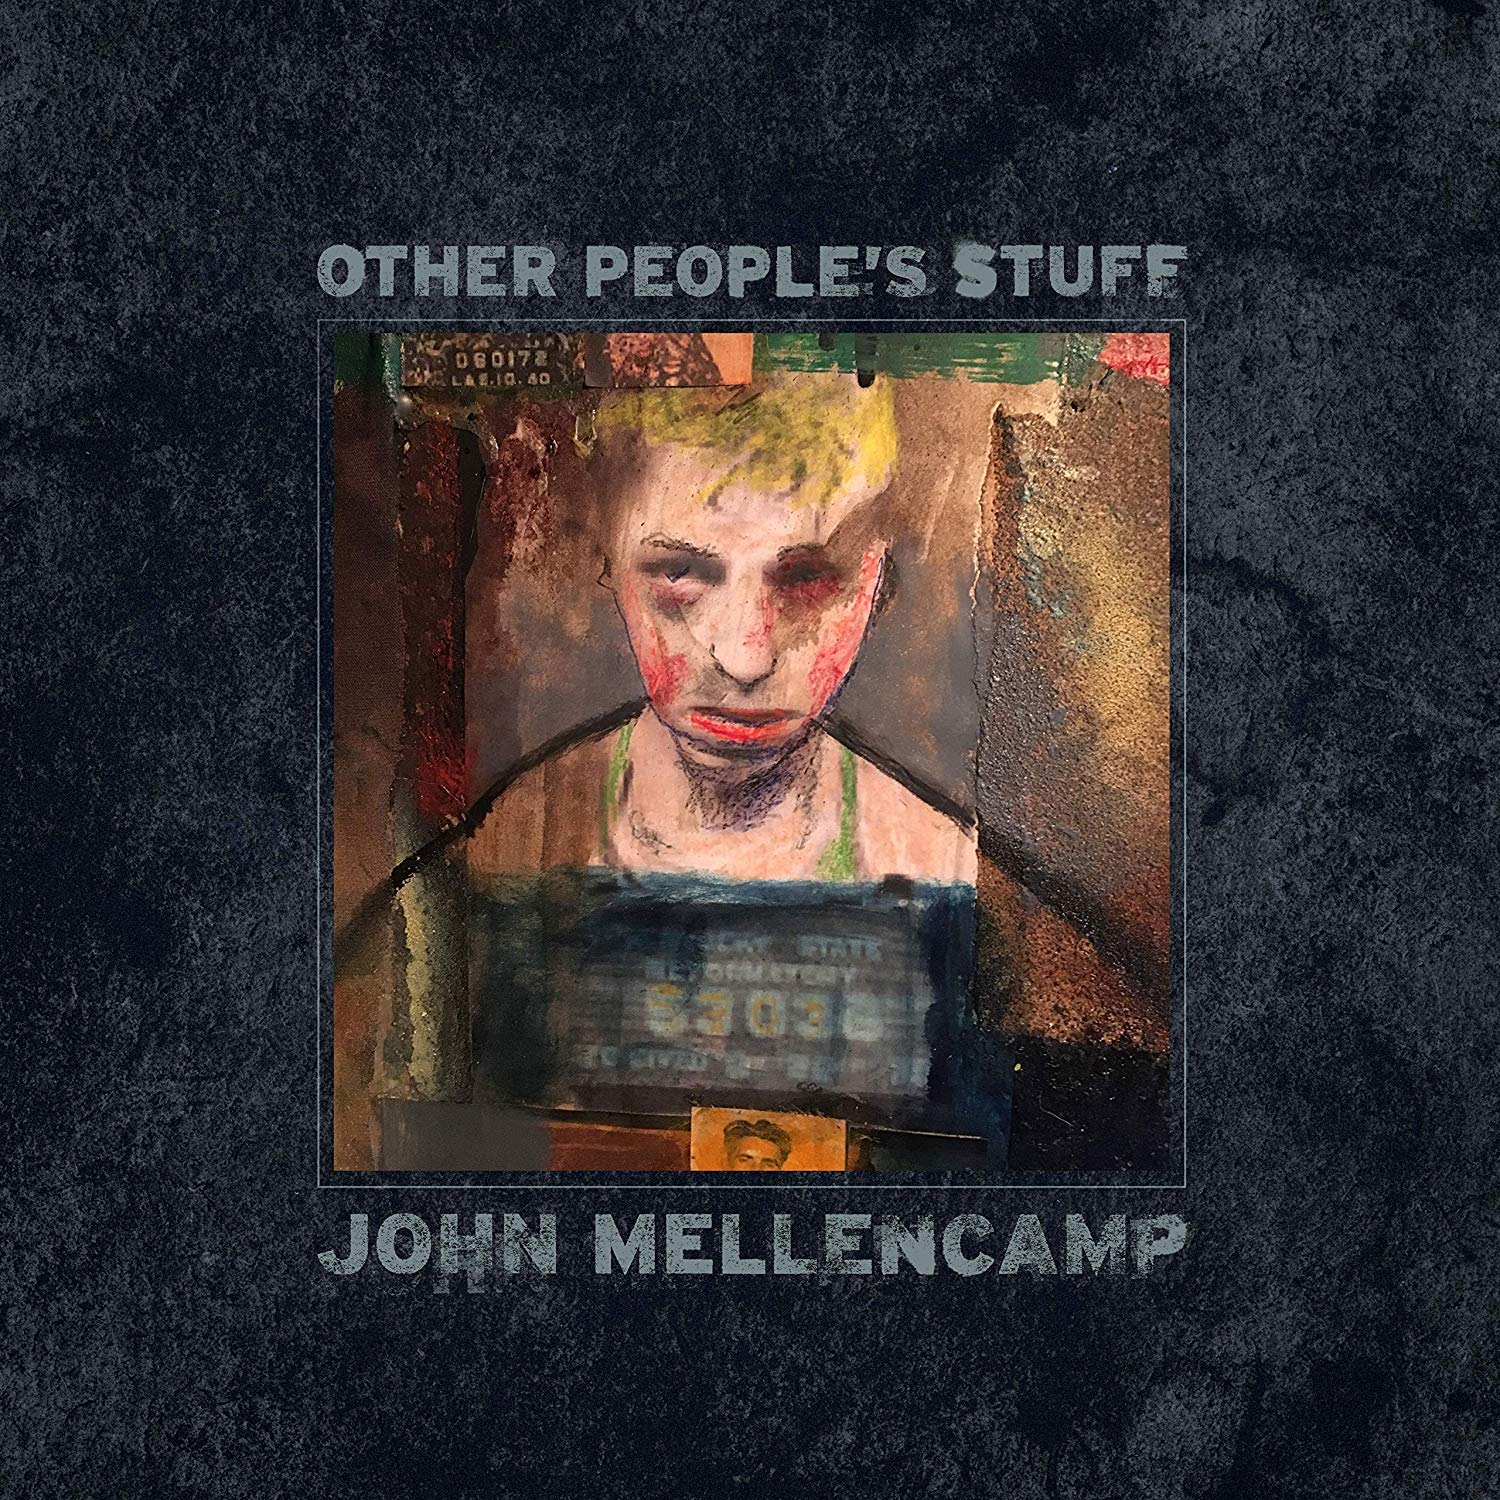 John Mellencamp - Other People's Stuff vinyl cover